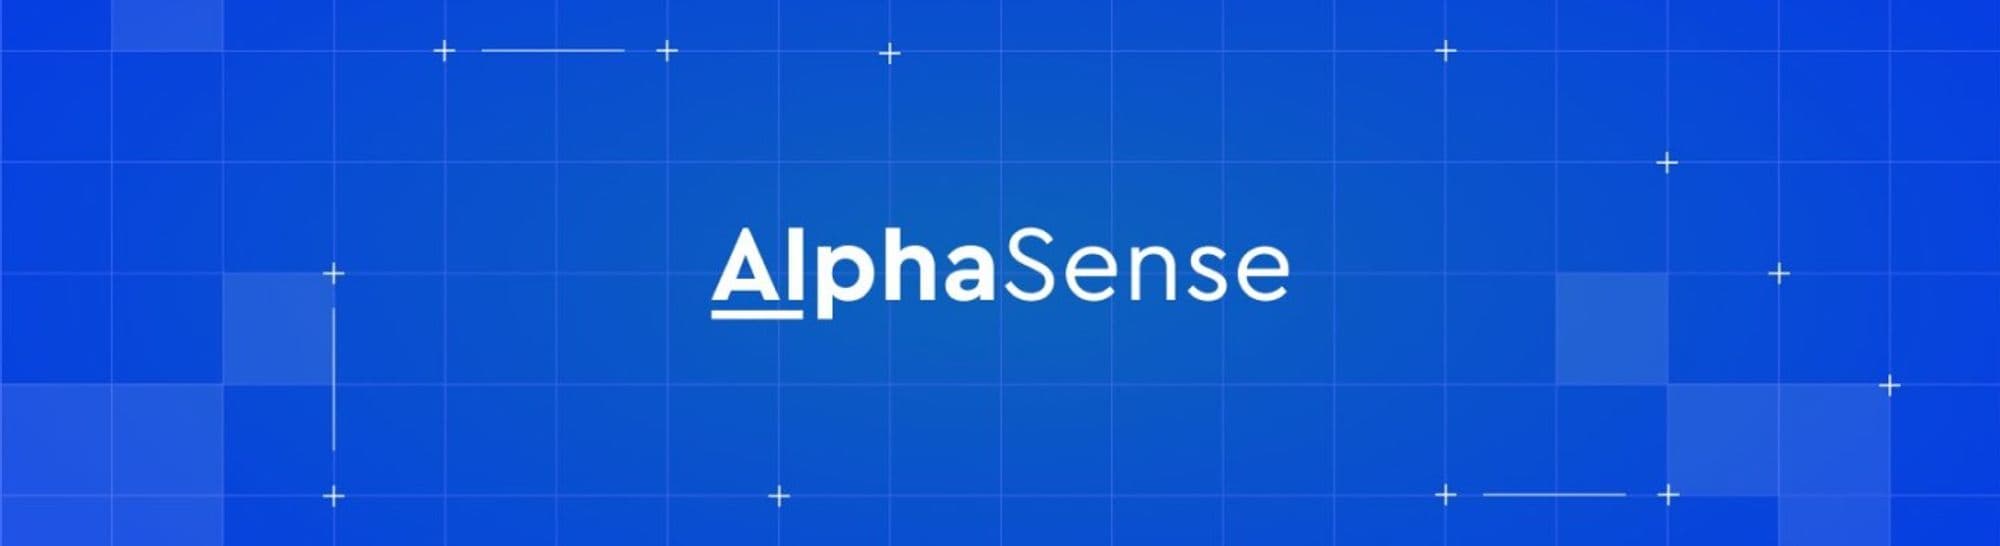 Alphasense Cover Image